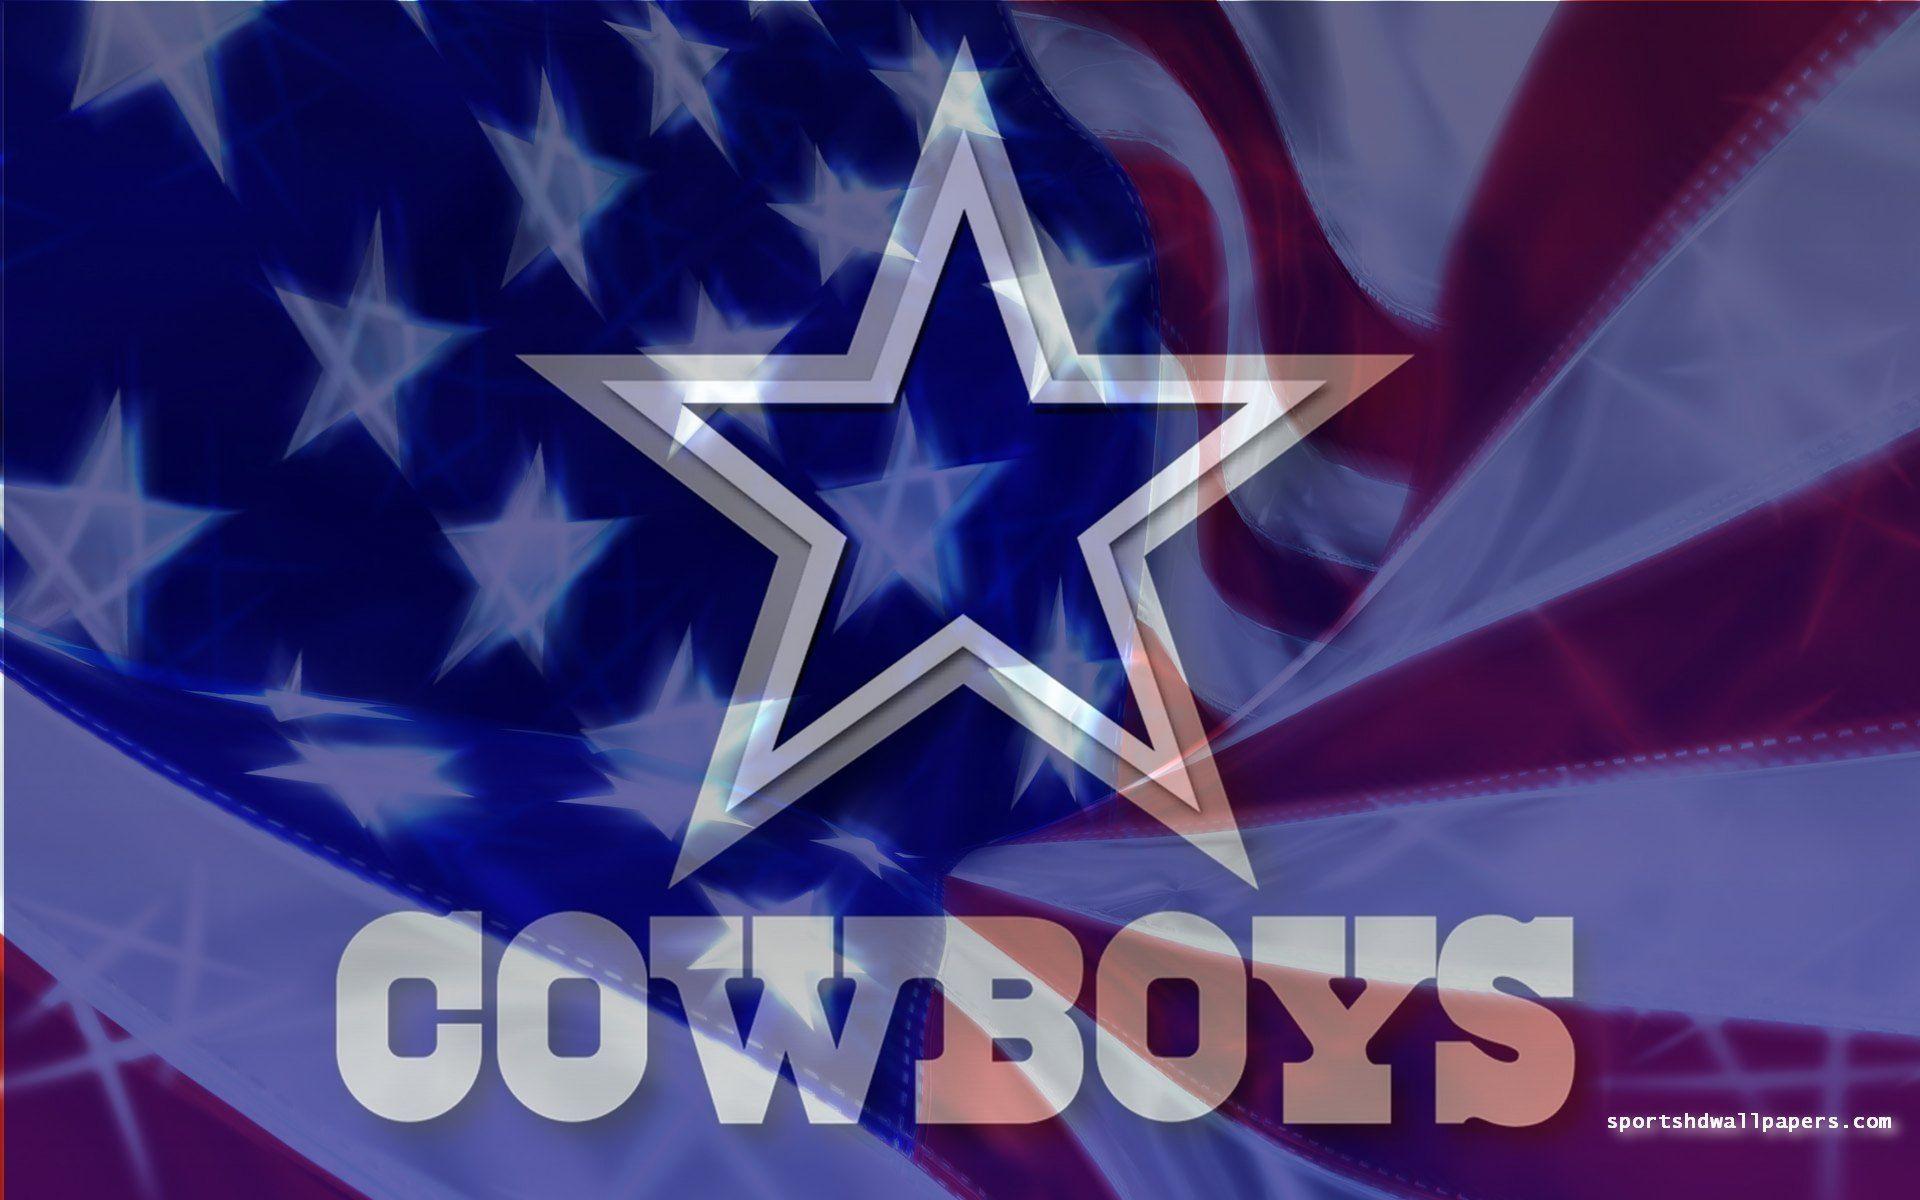 Dallas Cowboys Image Wallpapers